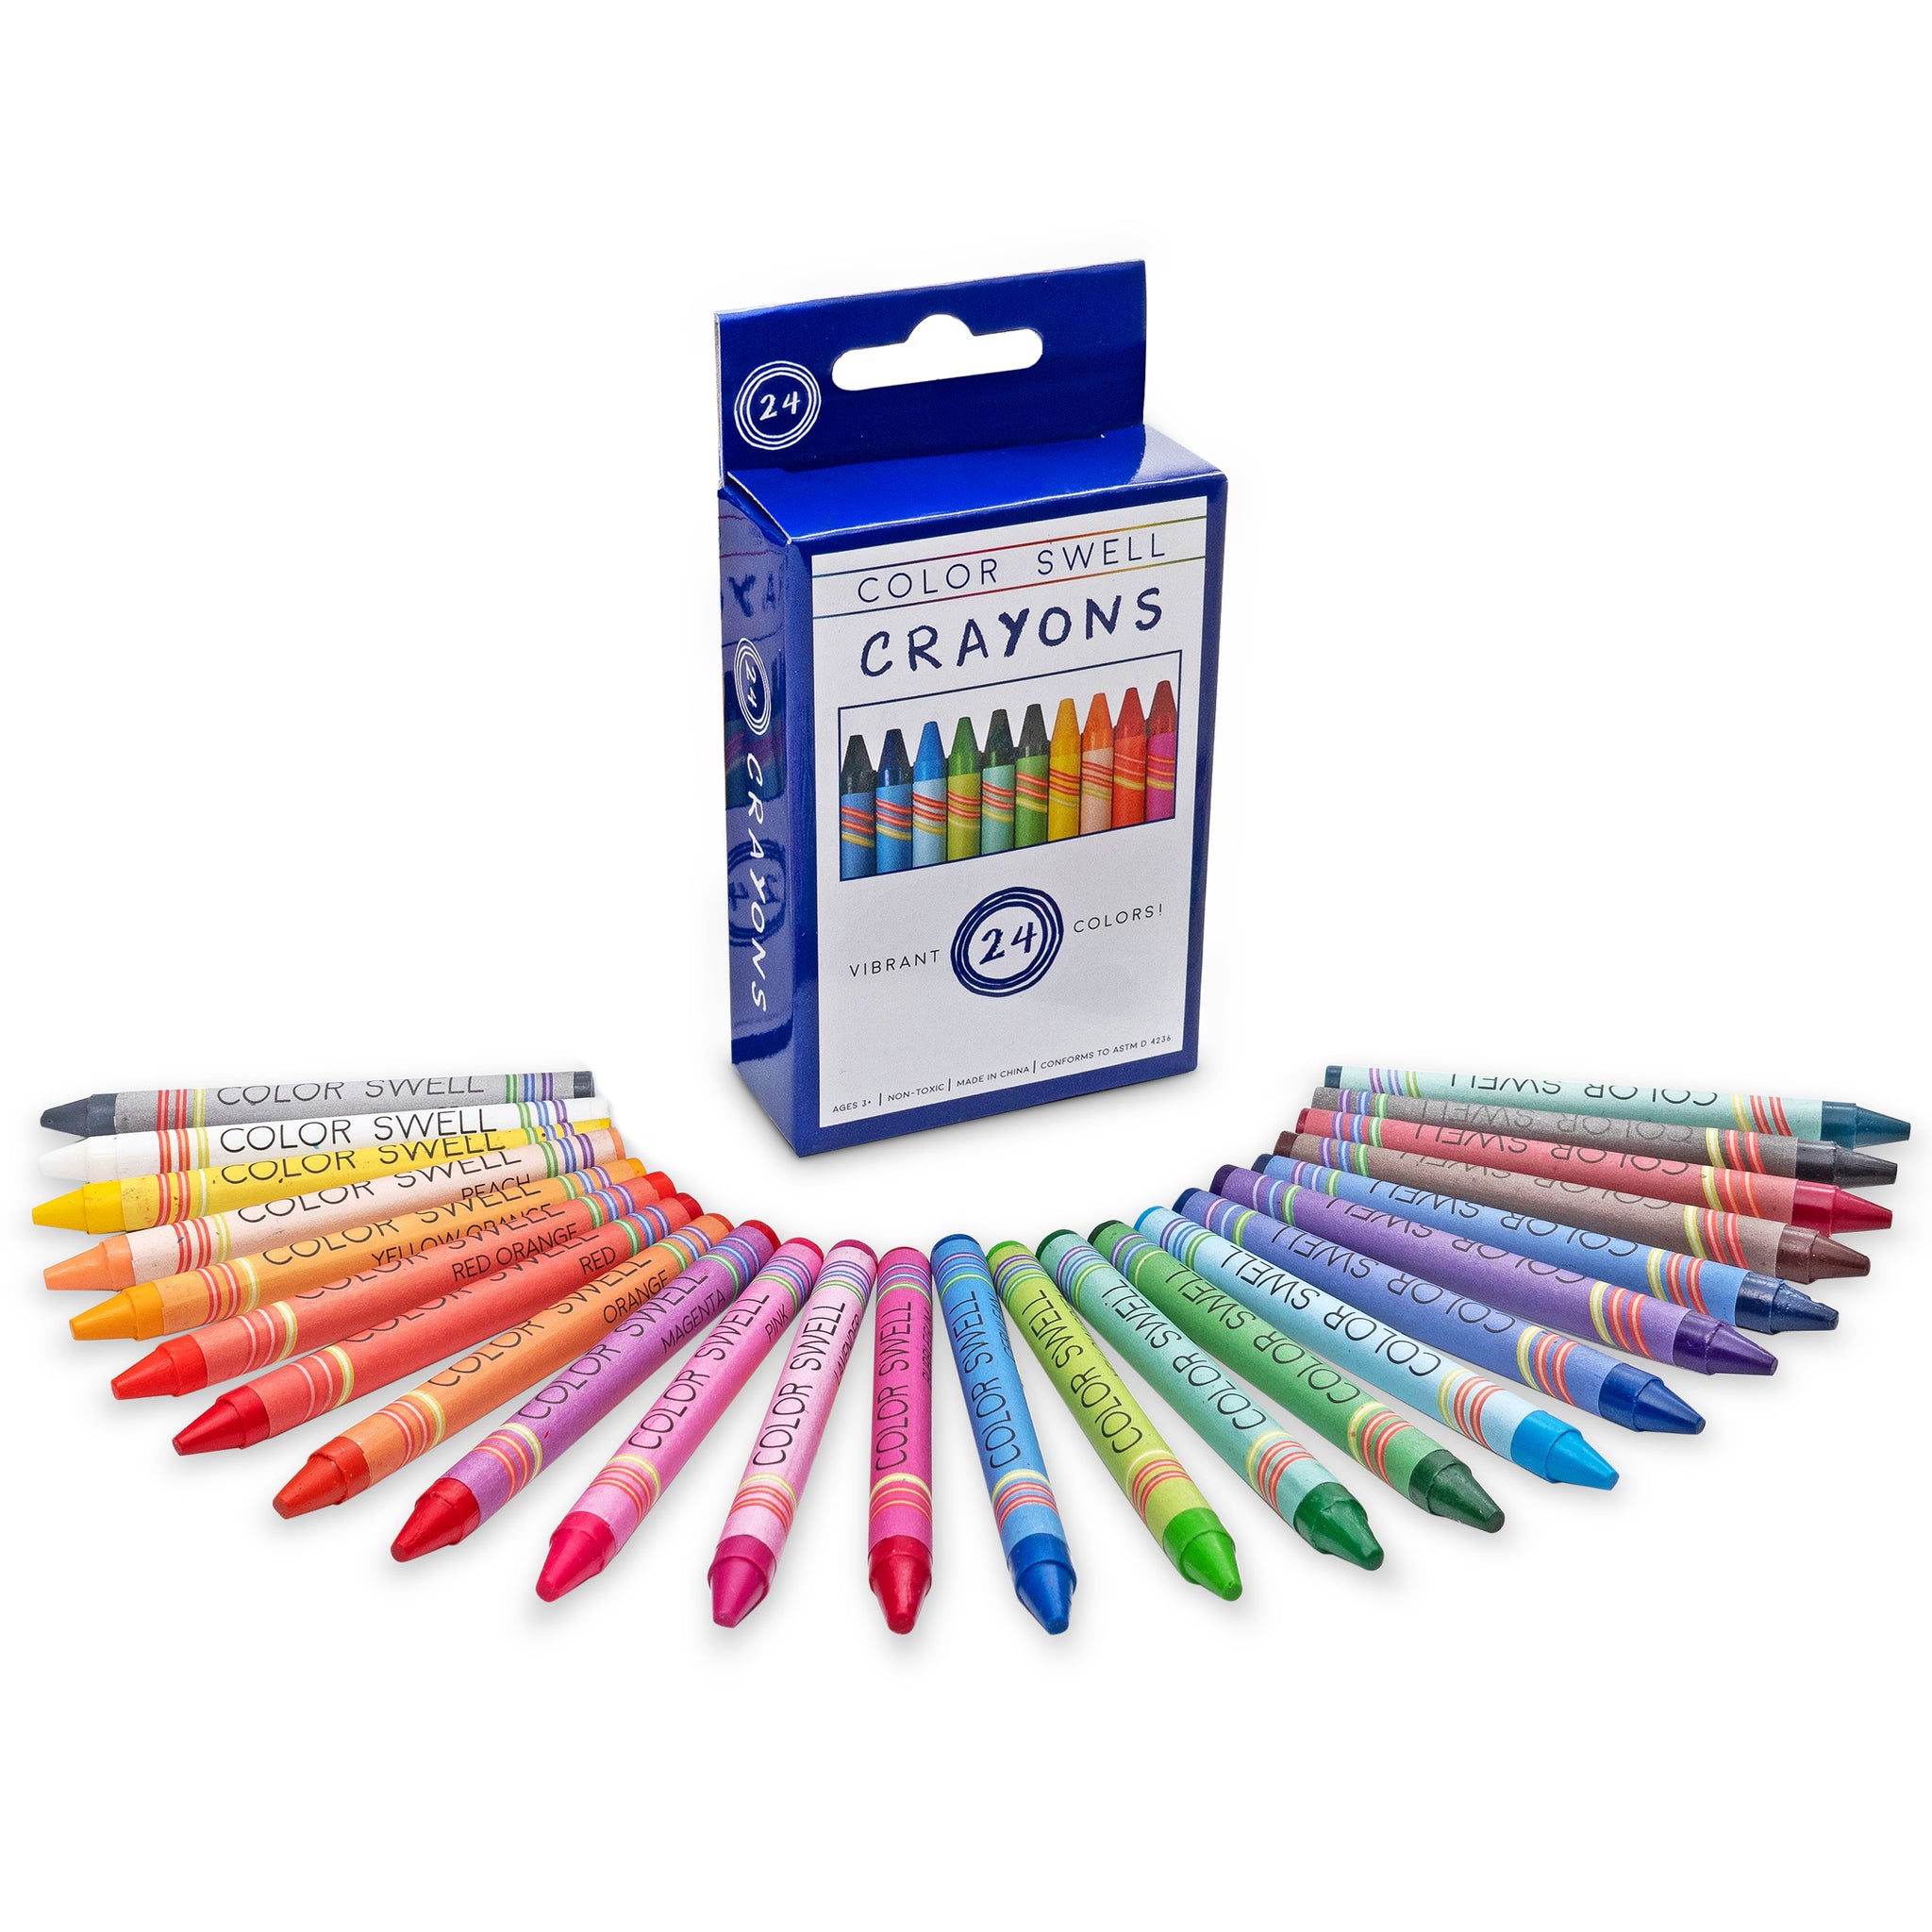 Crayola Glitter Crayons Set of 24